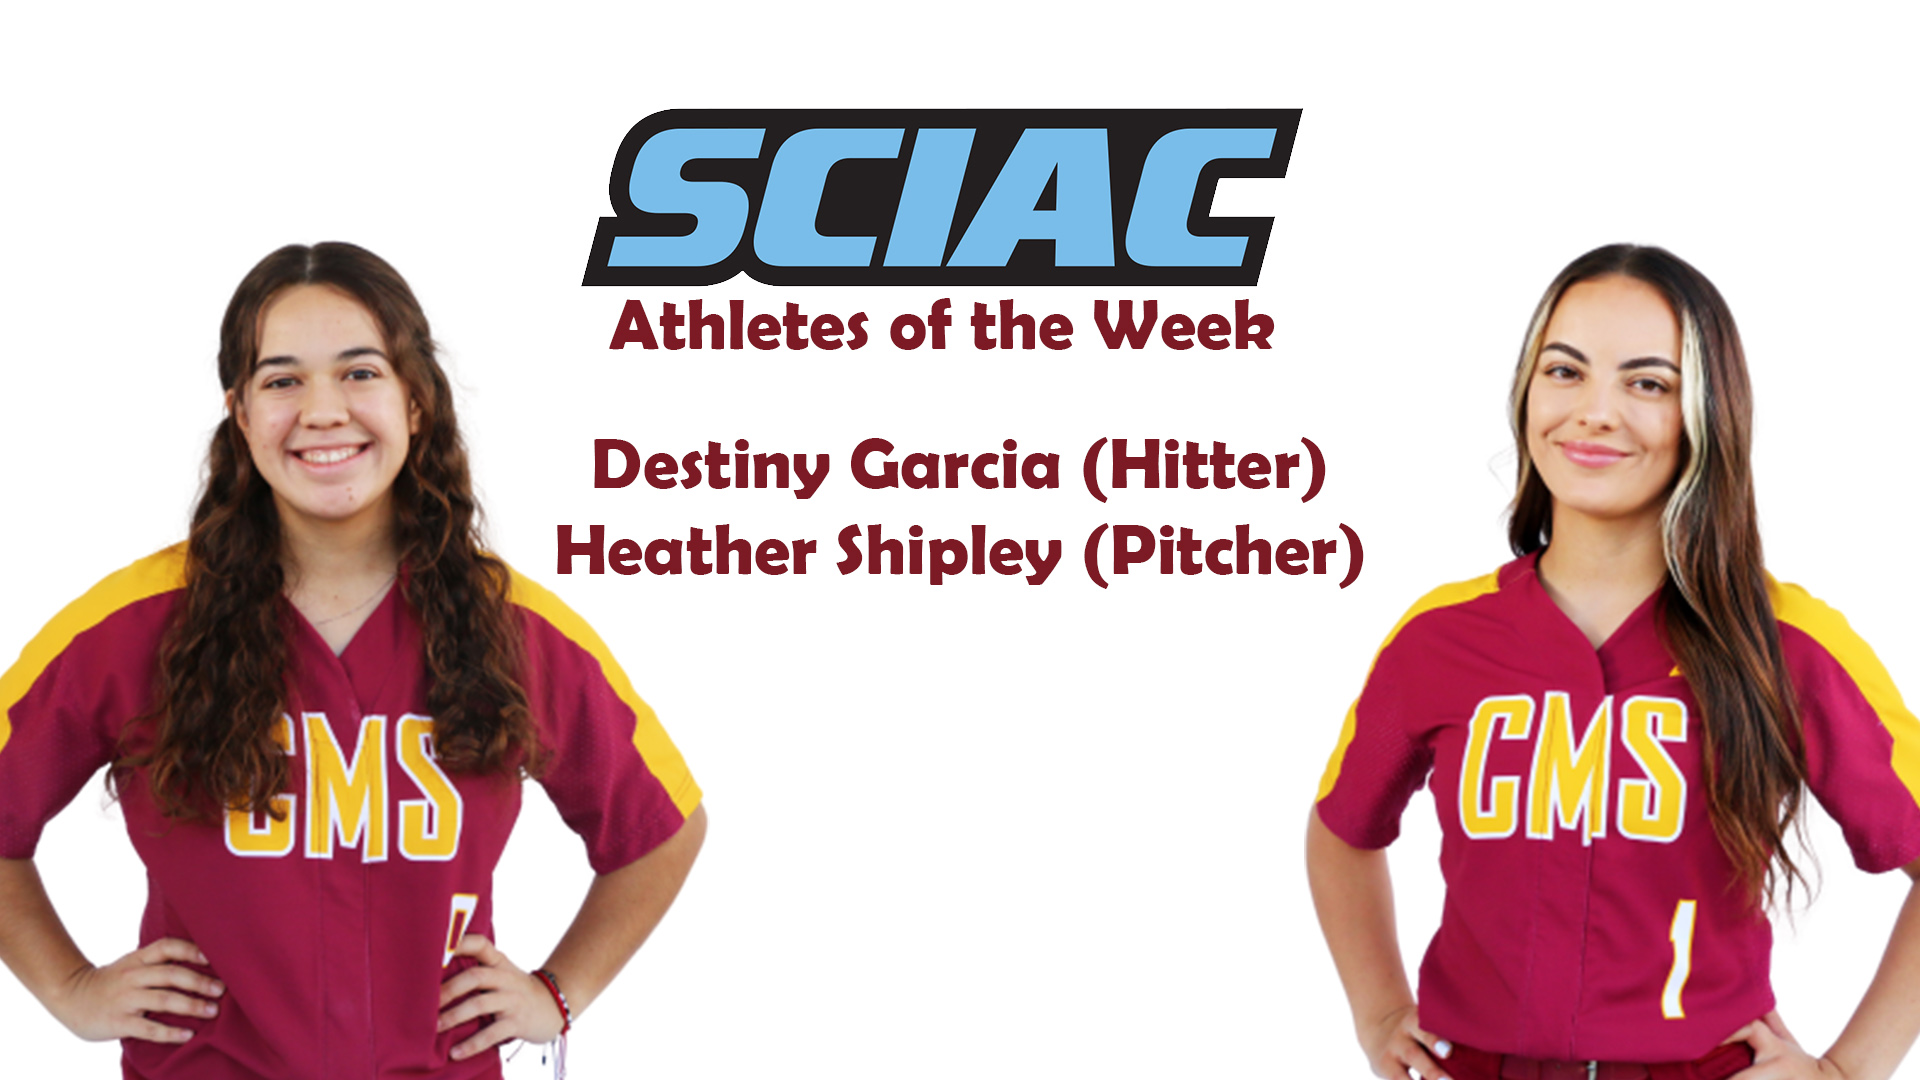 Posed photos of Destiny Garcia and Heather Shipley with the SCIAC logo